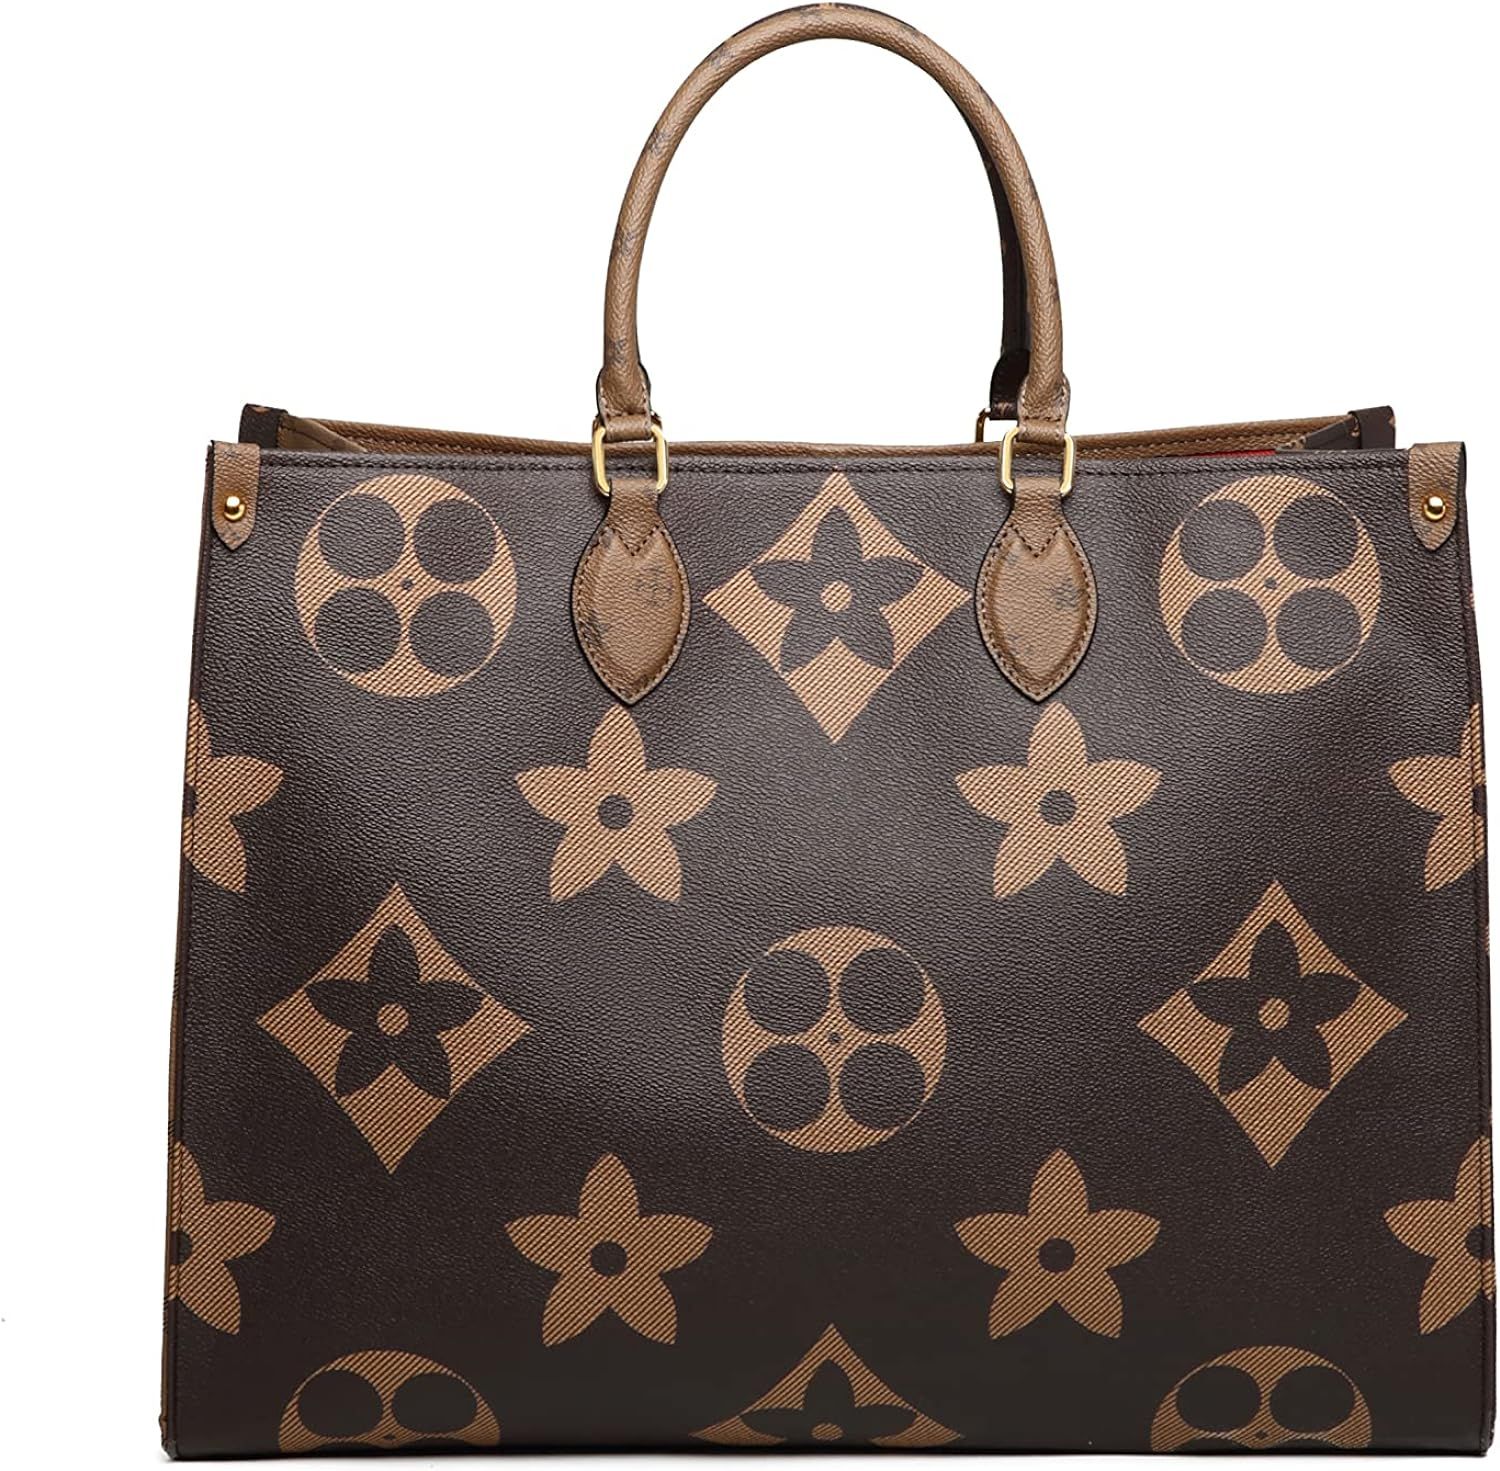 MILA KATE Satchel handbags Tote Bag for Women - Designer-Inspired Ladies Purse | Amazon (US)